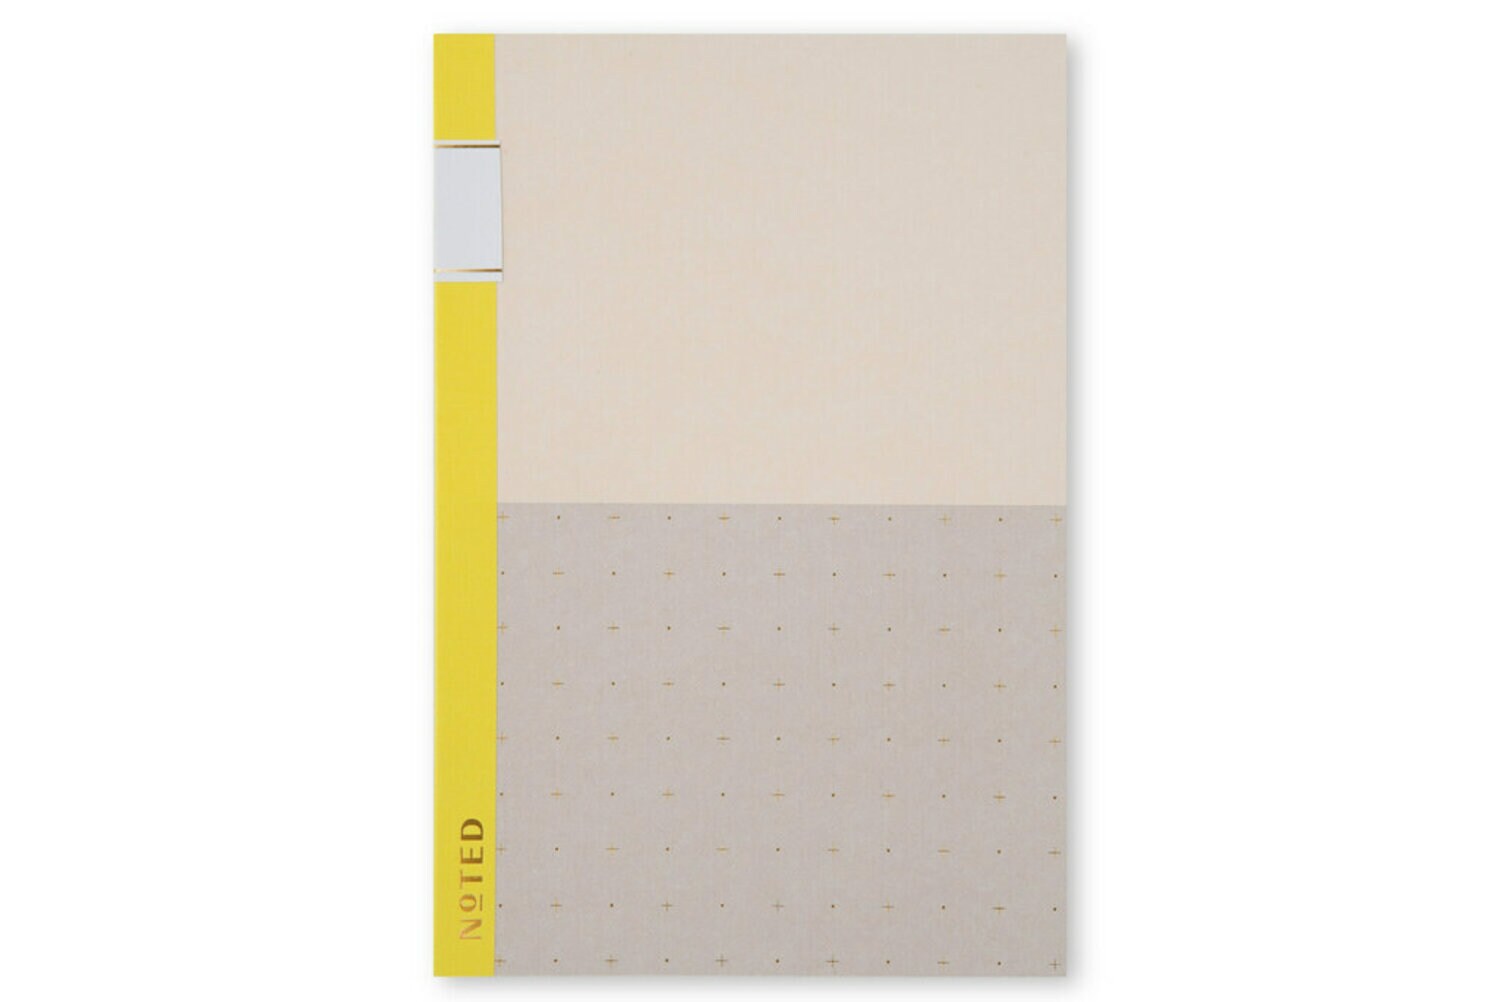 7100258813 - Post-it Notebook NTD-N58-NT, 8.5 in x 5.75 in (215 mm x 146 mm)